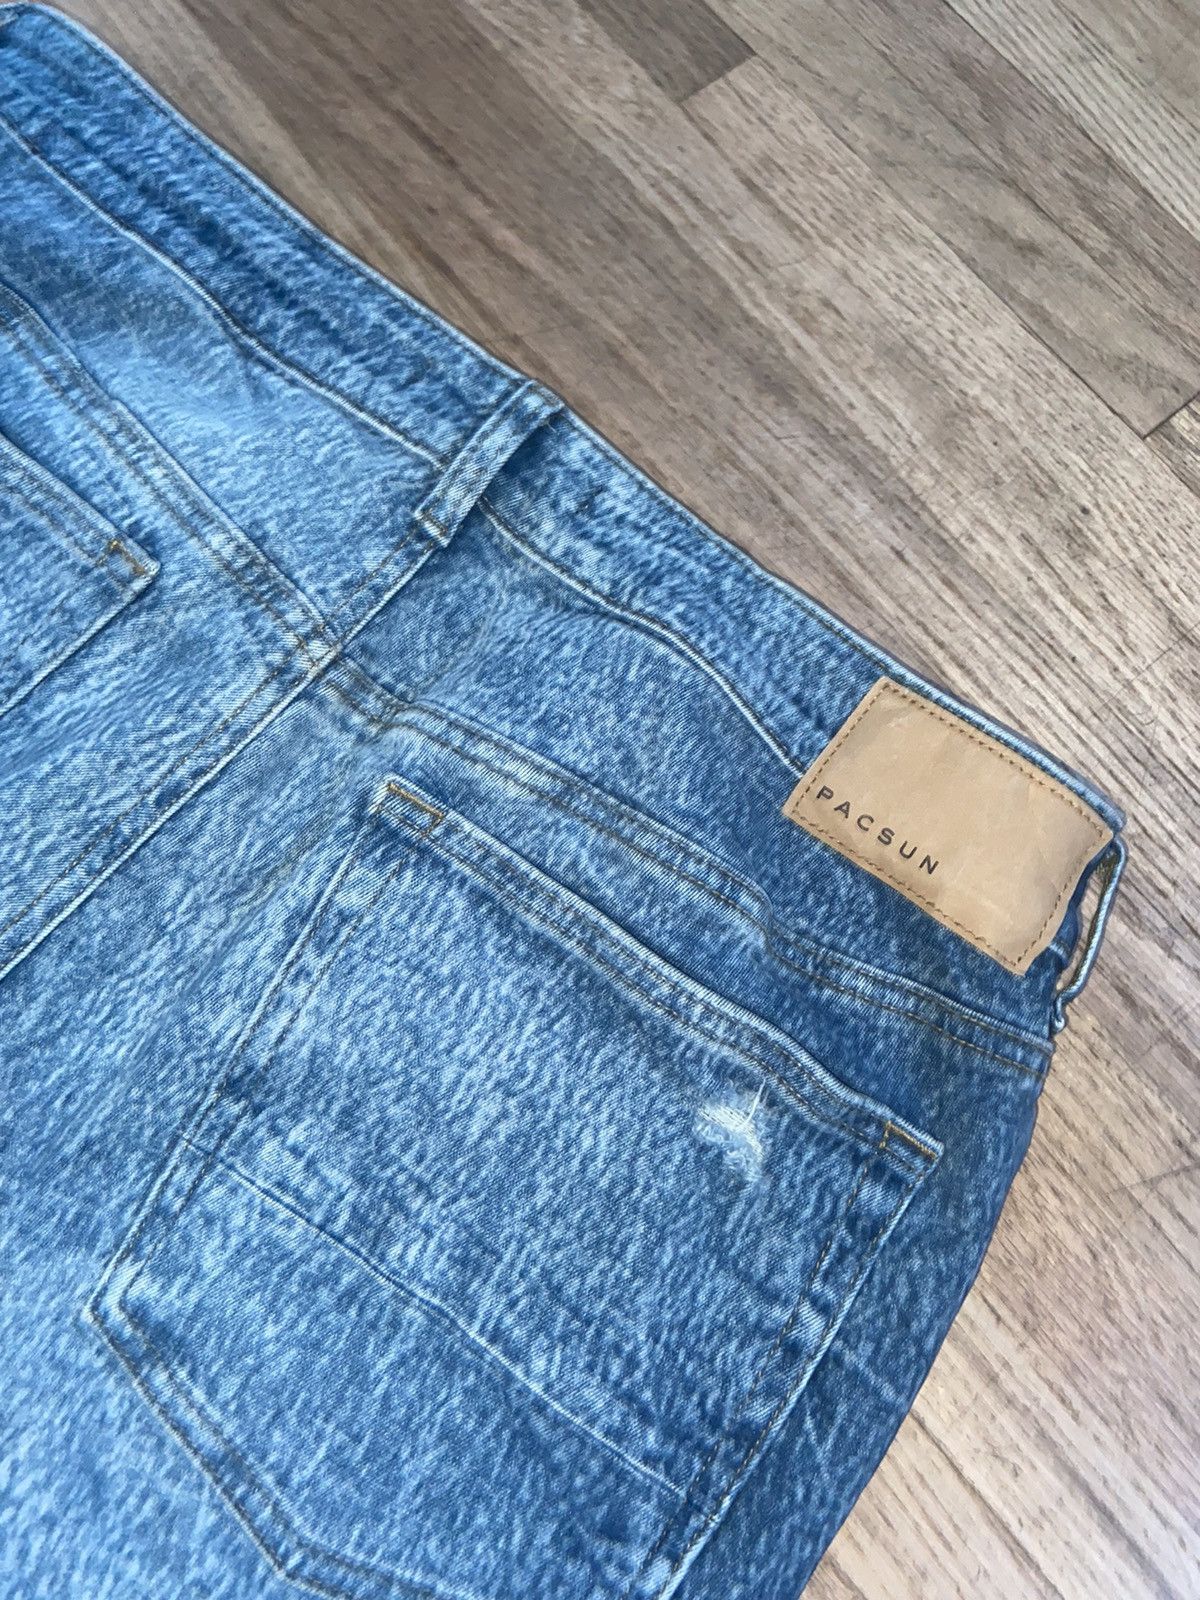 Pacsun Pacsun Ripped Jeans Size US 34 / EU 50 - 5 Preview